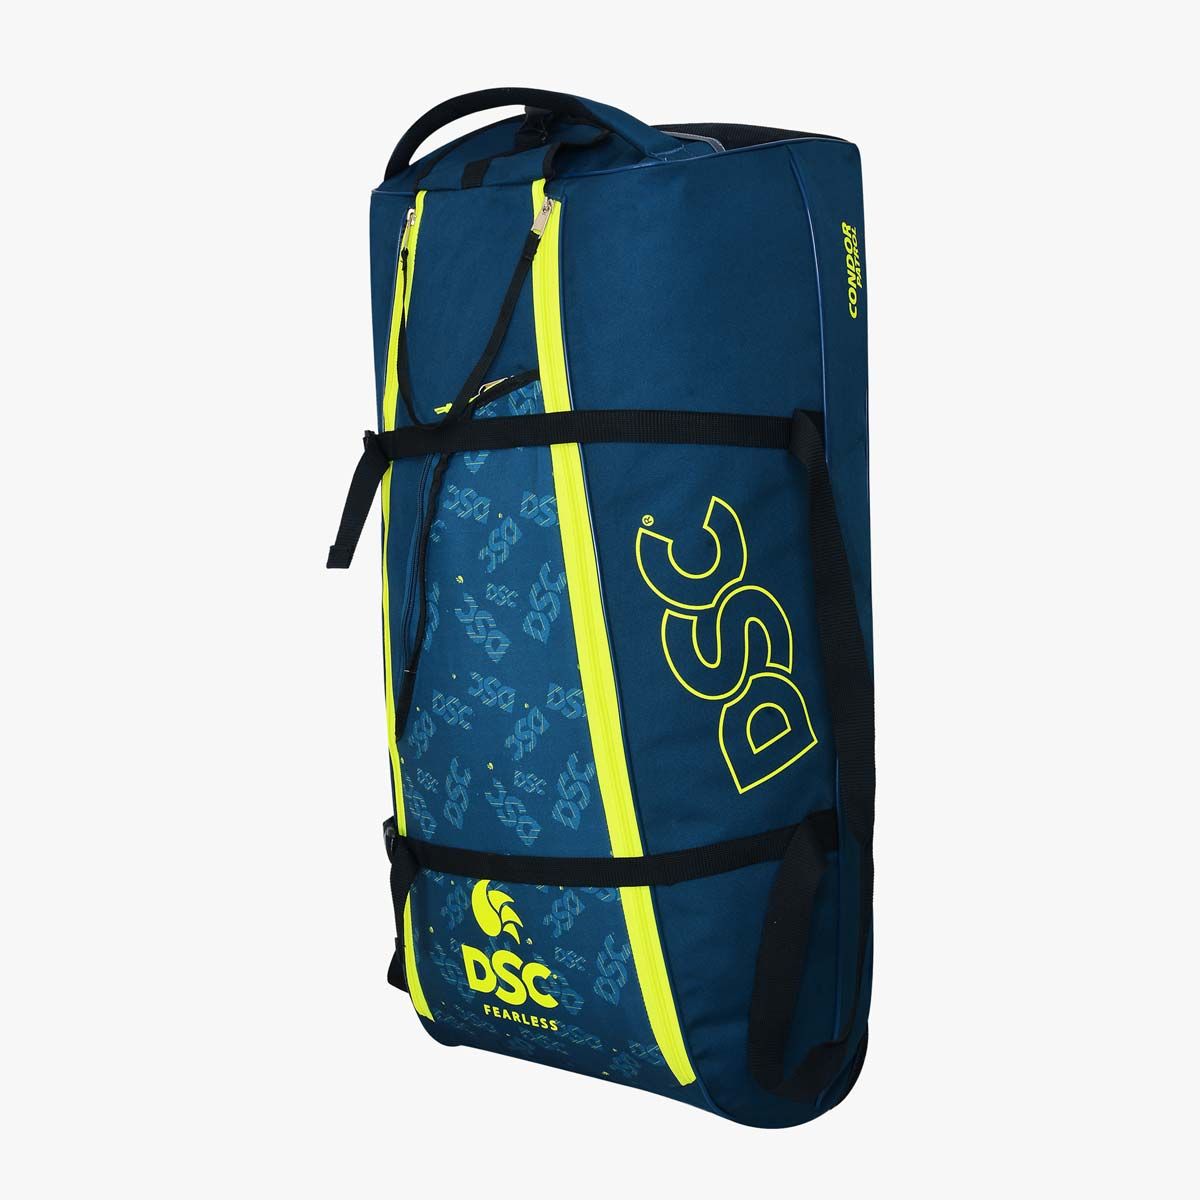 DSC Cricket Condor Patrol Wheelie Kit Bag